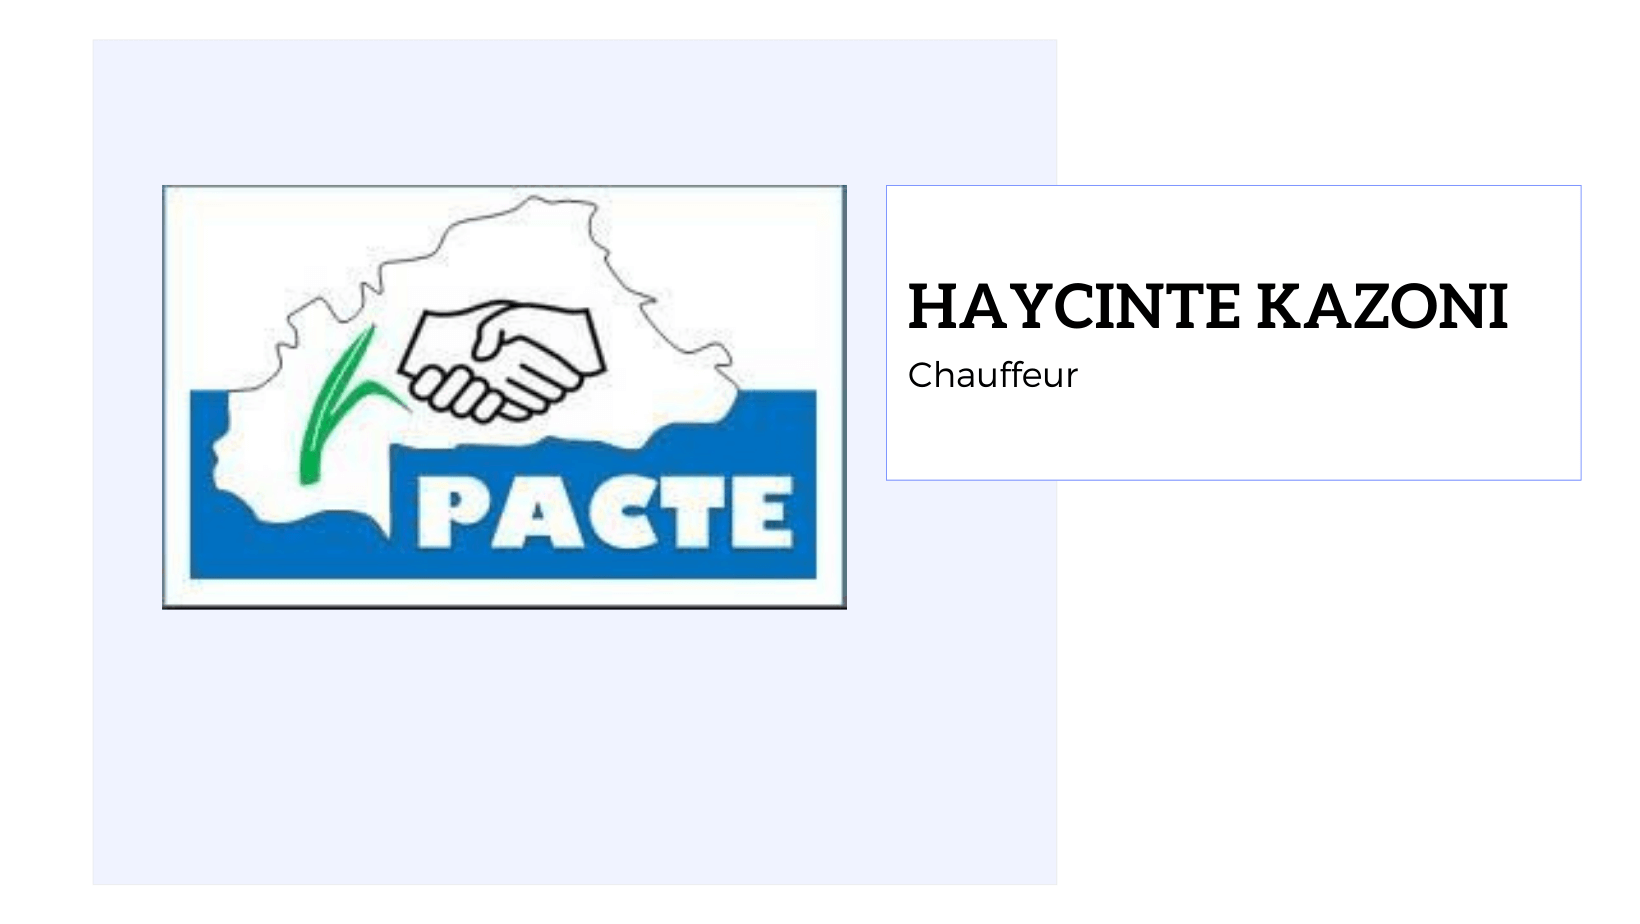 Haycinte KAZONI<br />
Chauffeur